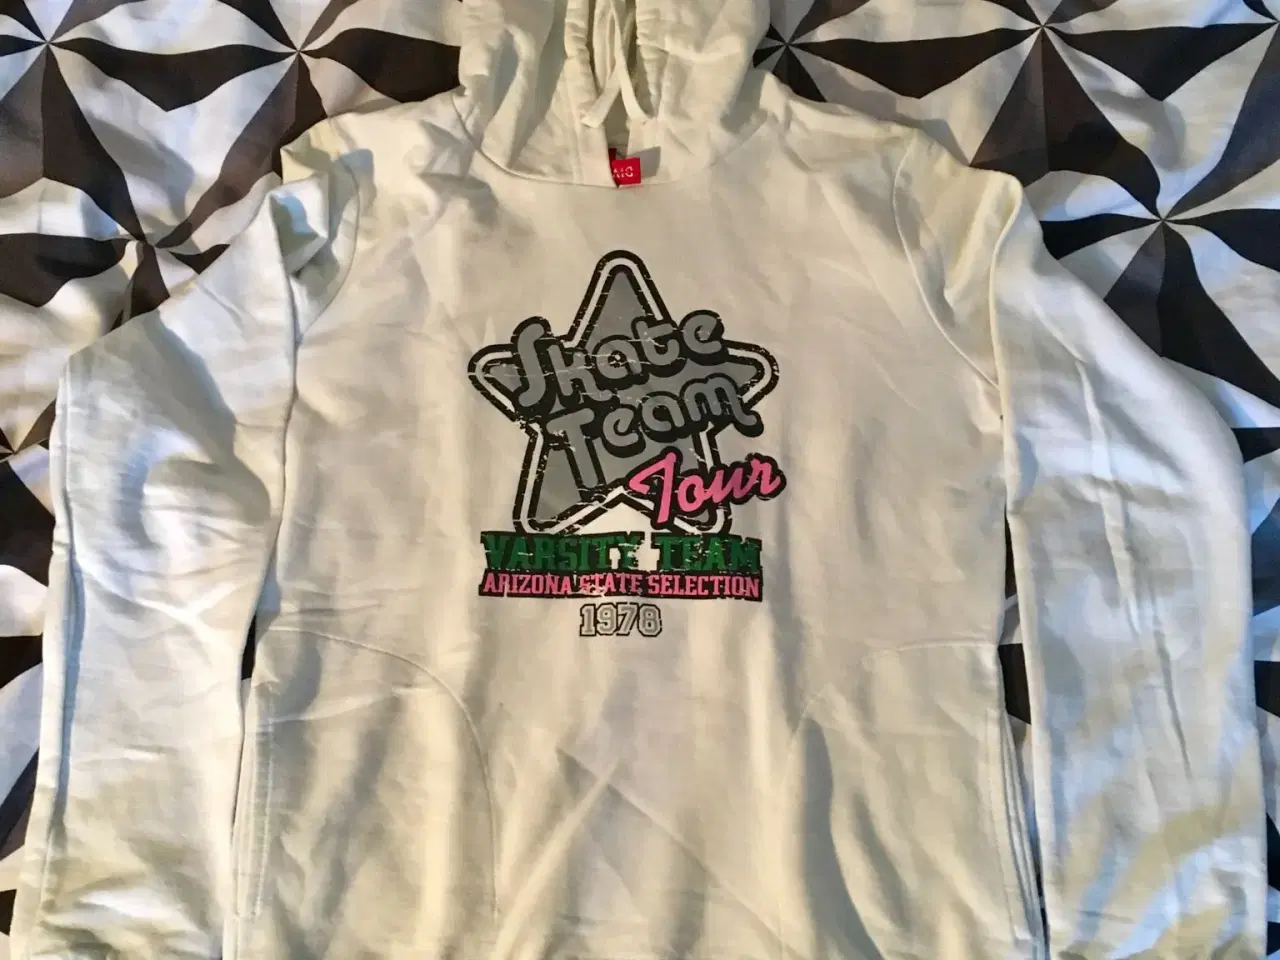 Billede 1 - Hooded sweatshirt til salg